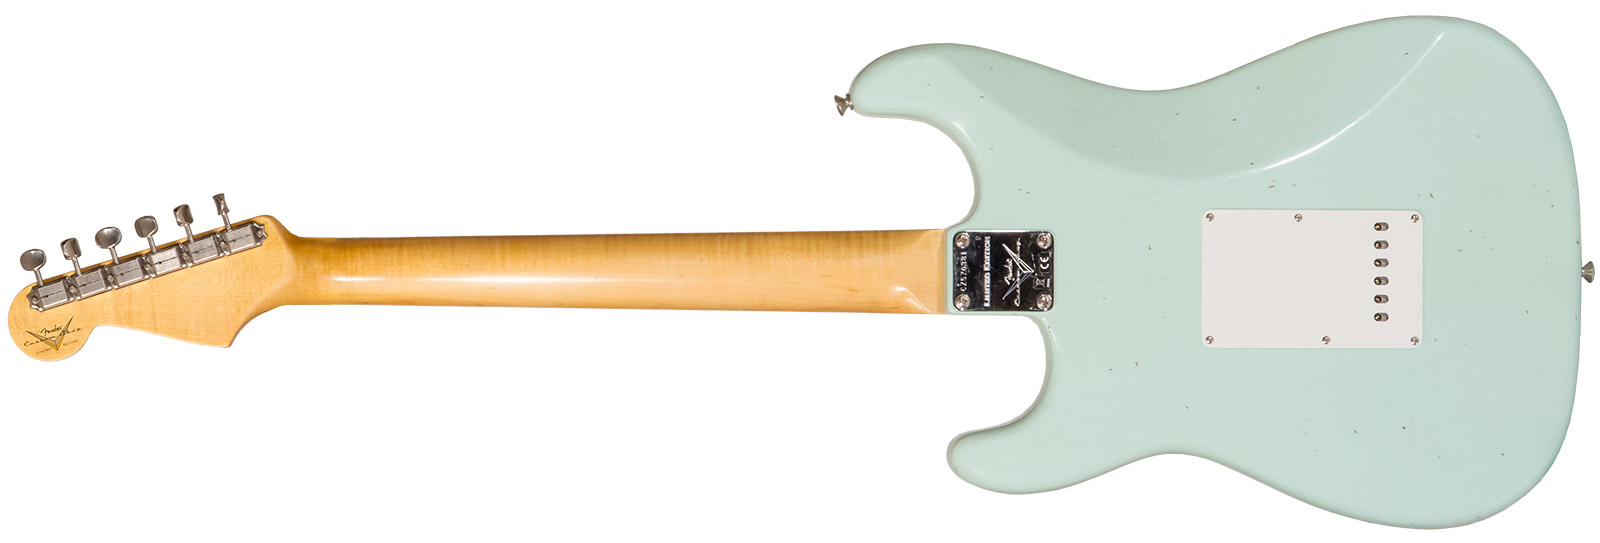 Fender Custom Shop Strat 1964 3s Trem Rw #cz570381 - Journeyman Relic Aged Surf Green - Guitarra eléctrica con forma de str. - Variation 1